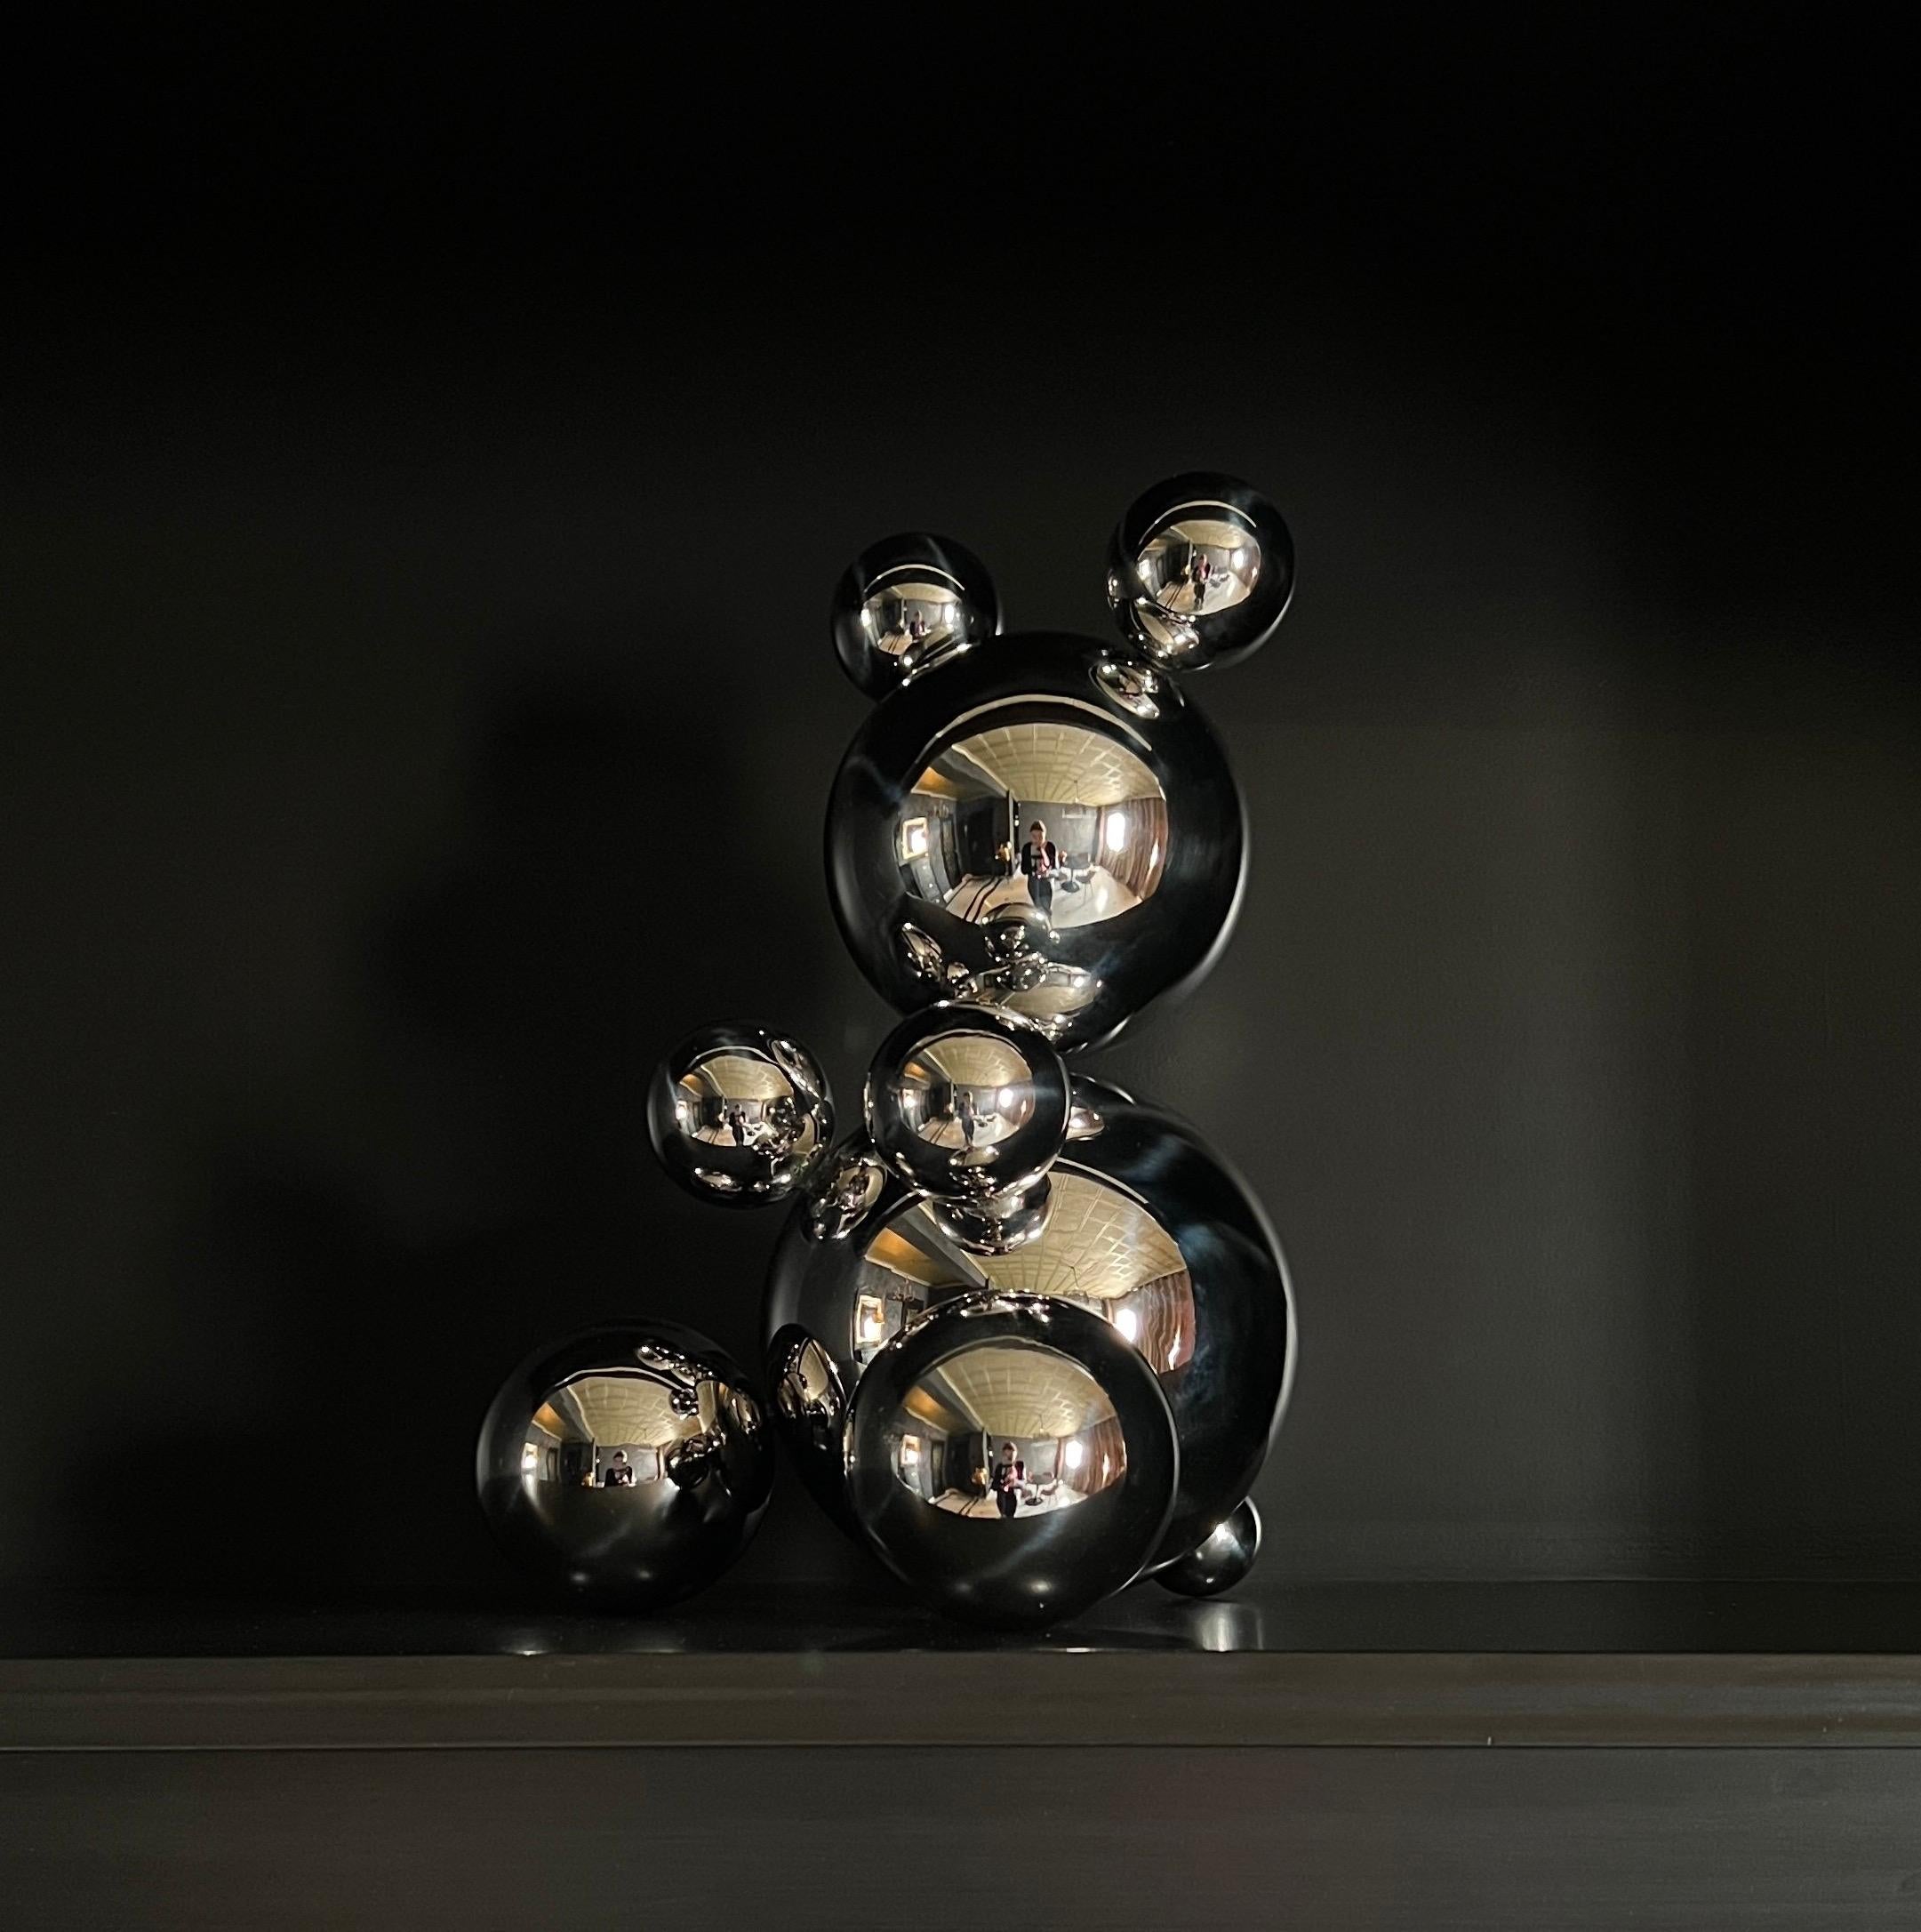 Middle Stainless Steel Bear 'James' Sculpture Minimalistic Animal 5